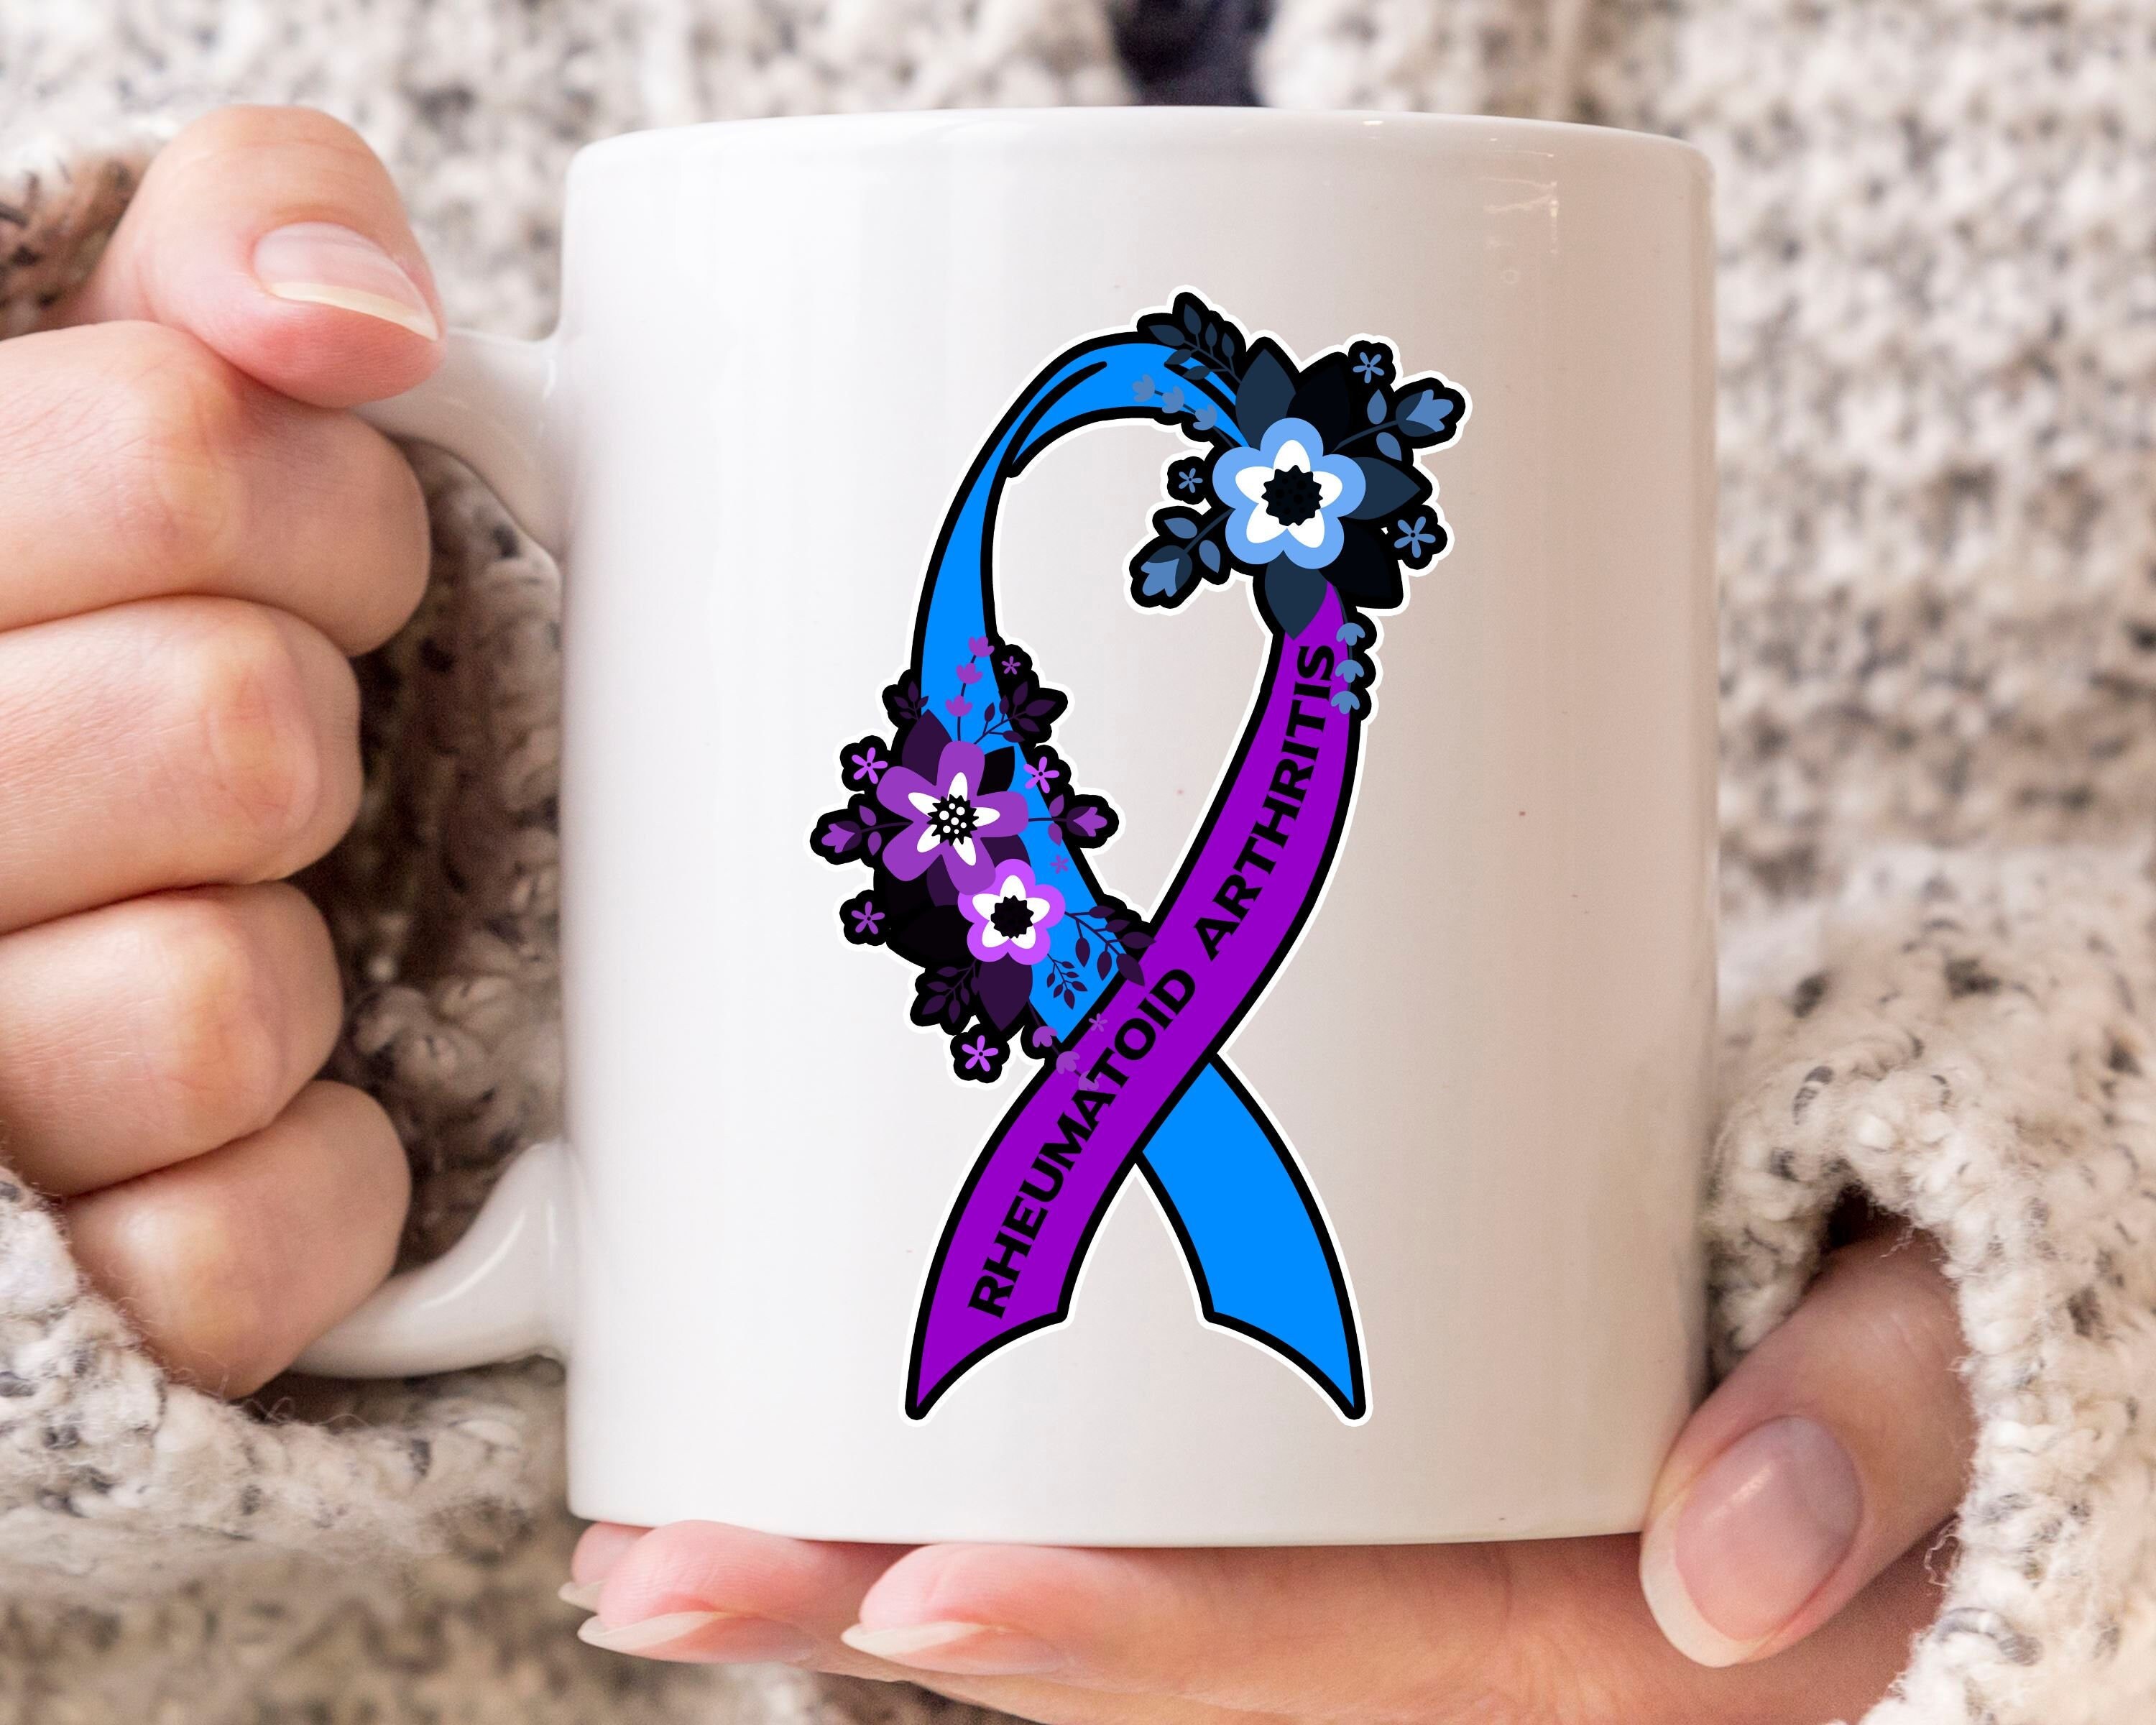 Rheumatoid Arthritis Awareness Month Ribbon Gifts Two-Tone Coffee Mug